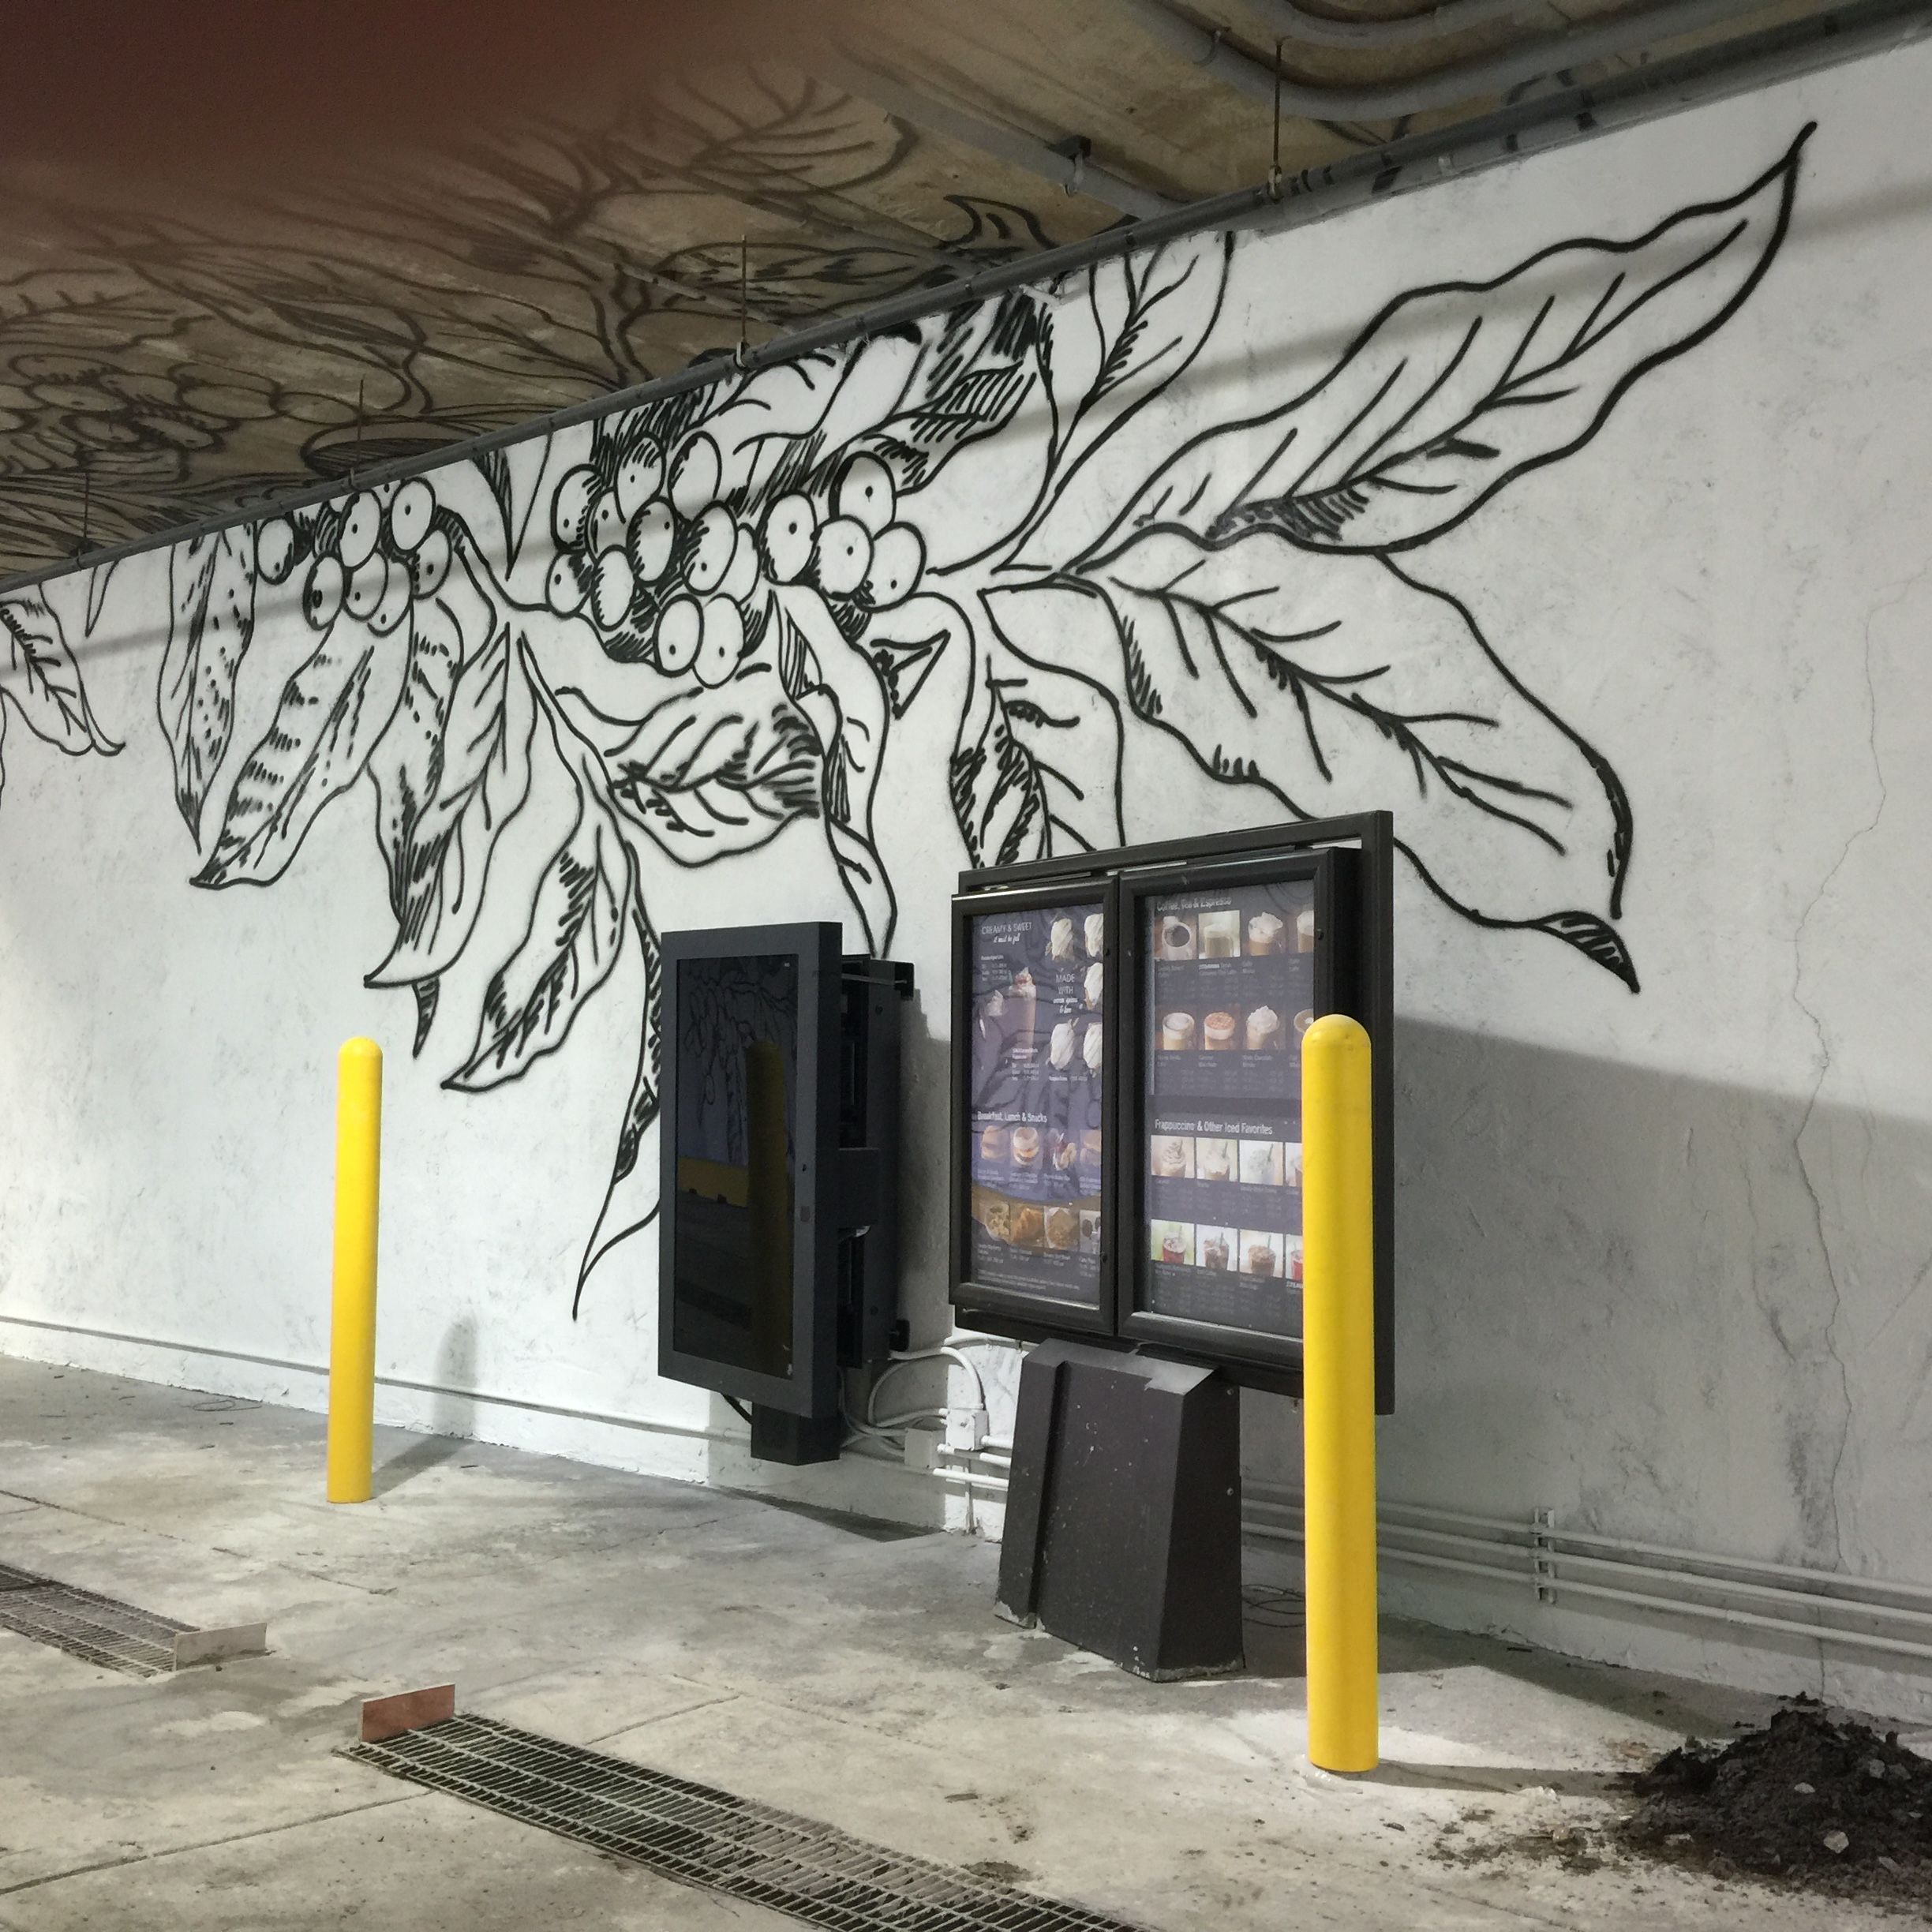 Starbucks Coffee Branch Graffiti Mural painted in the Starbucks ...